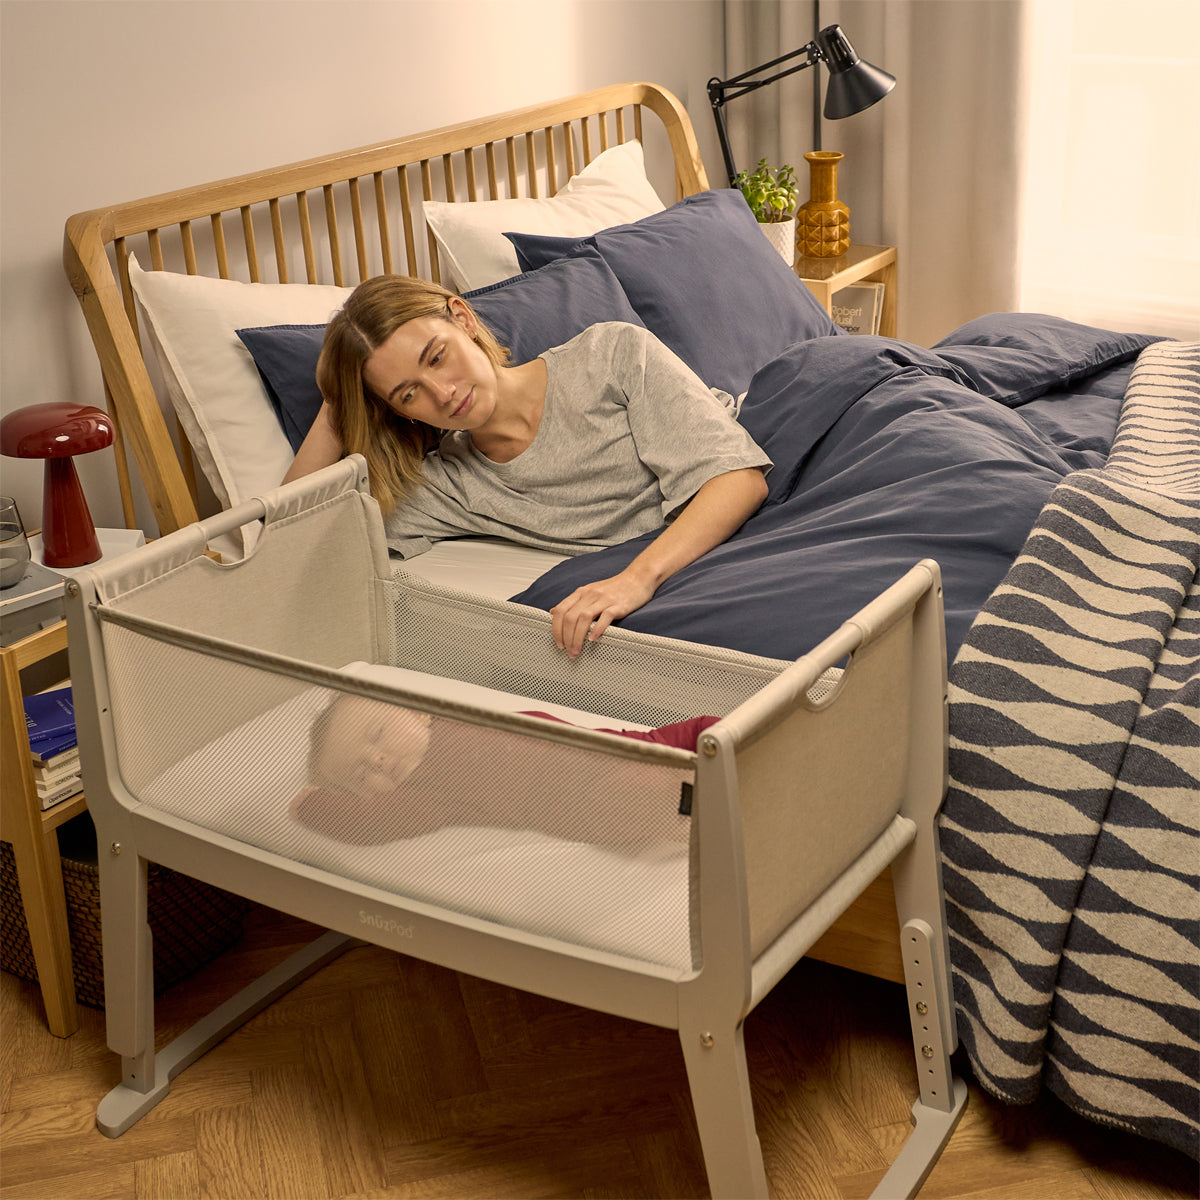 SnuzPod Studio Bedside Crib with mattress - Oslo Grey